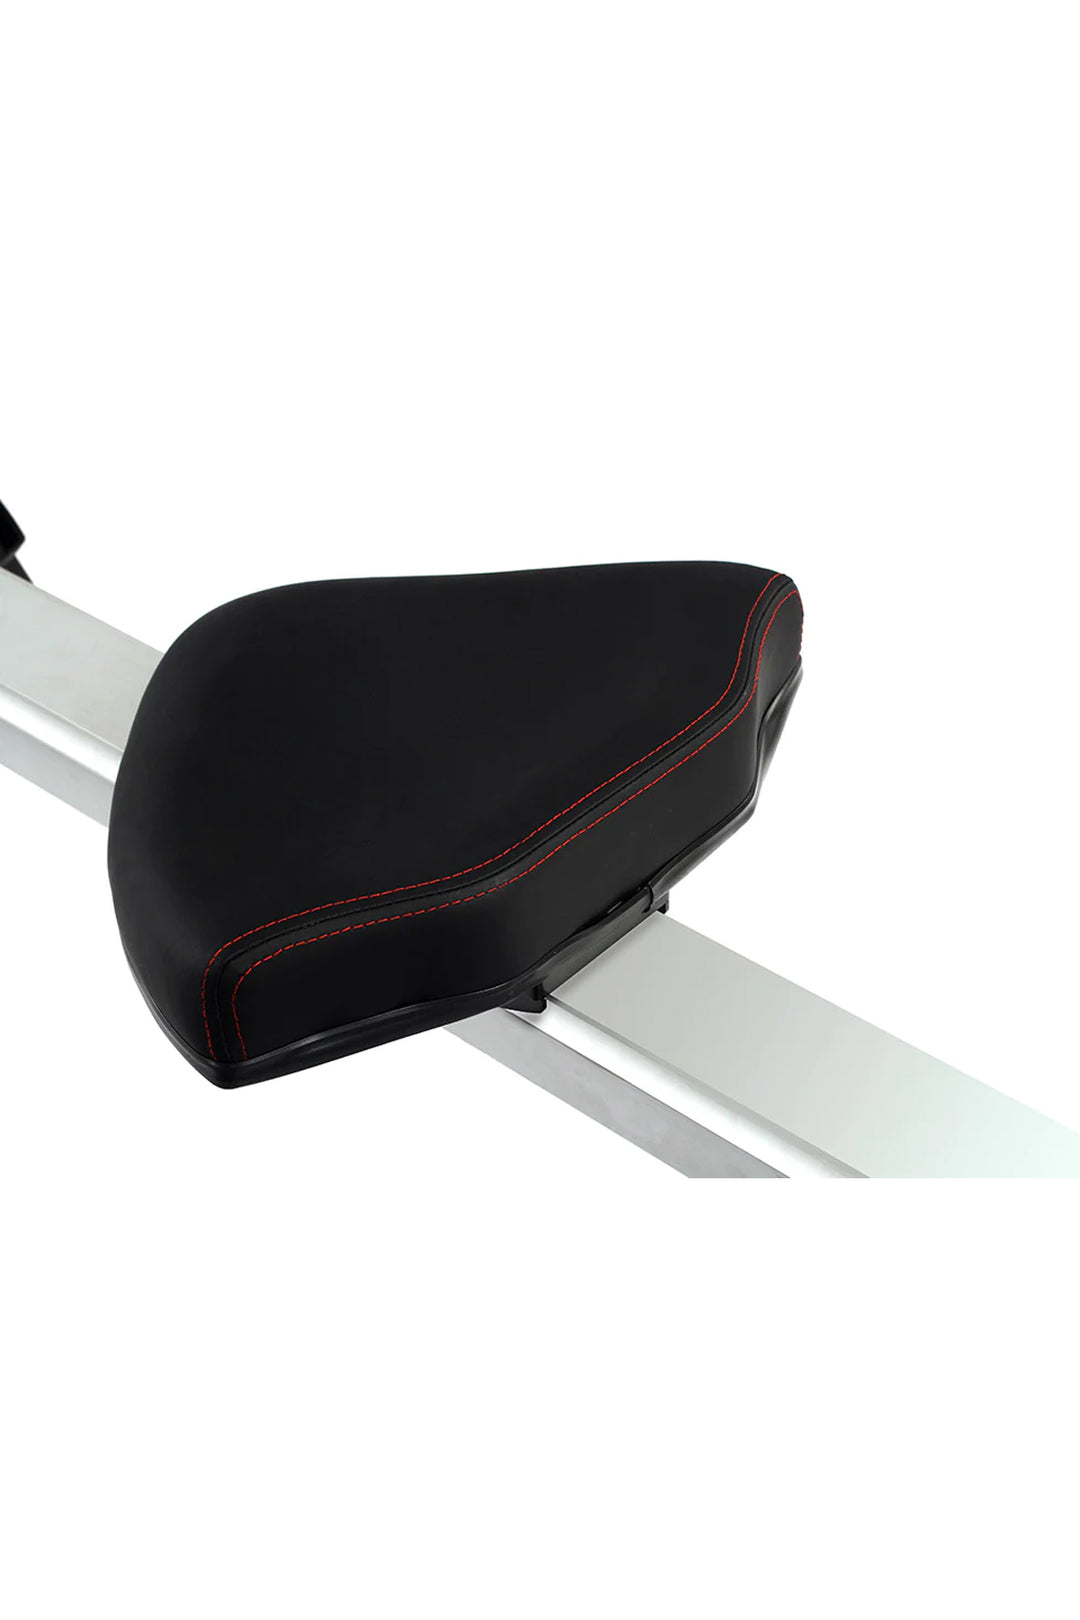 air mag rower seat